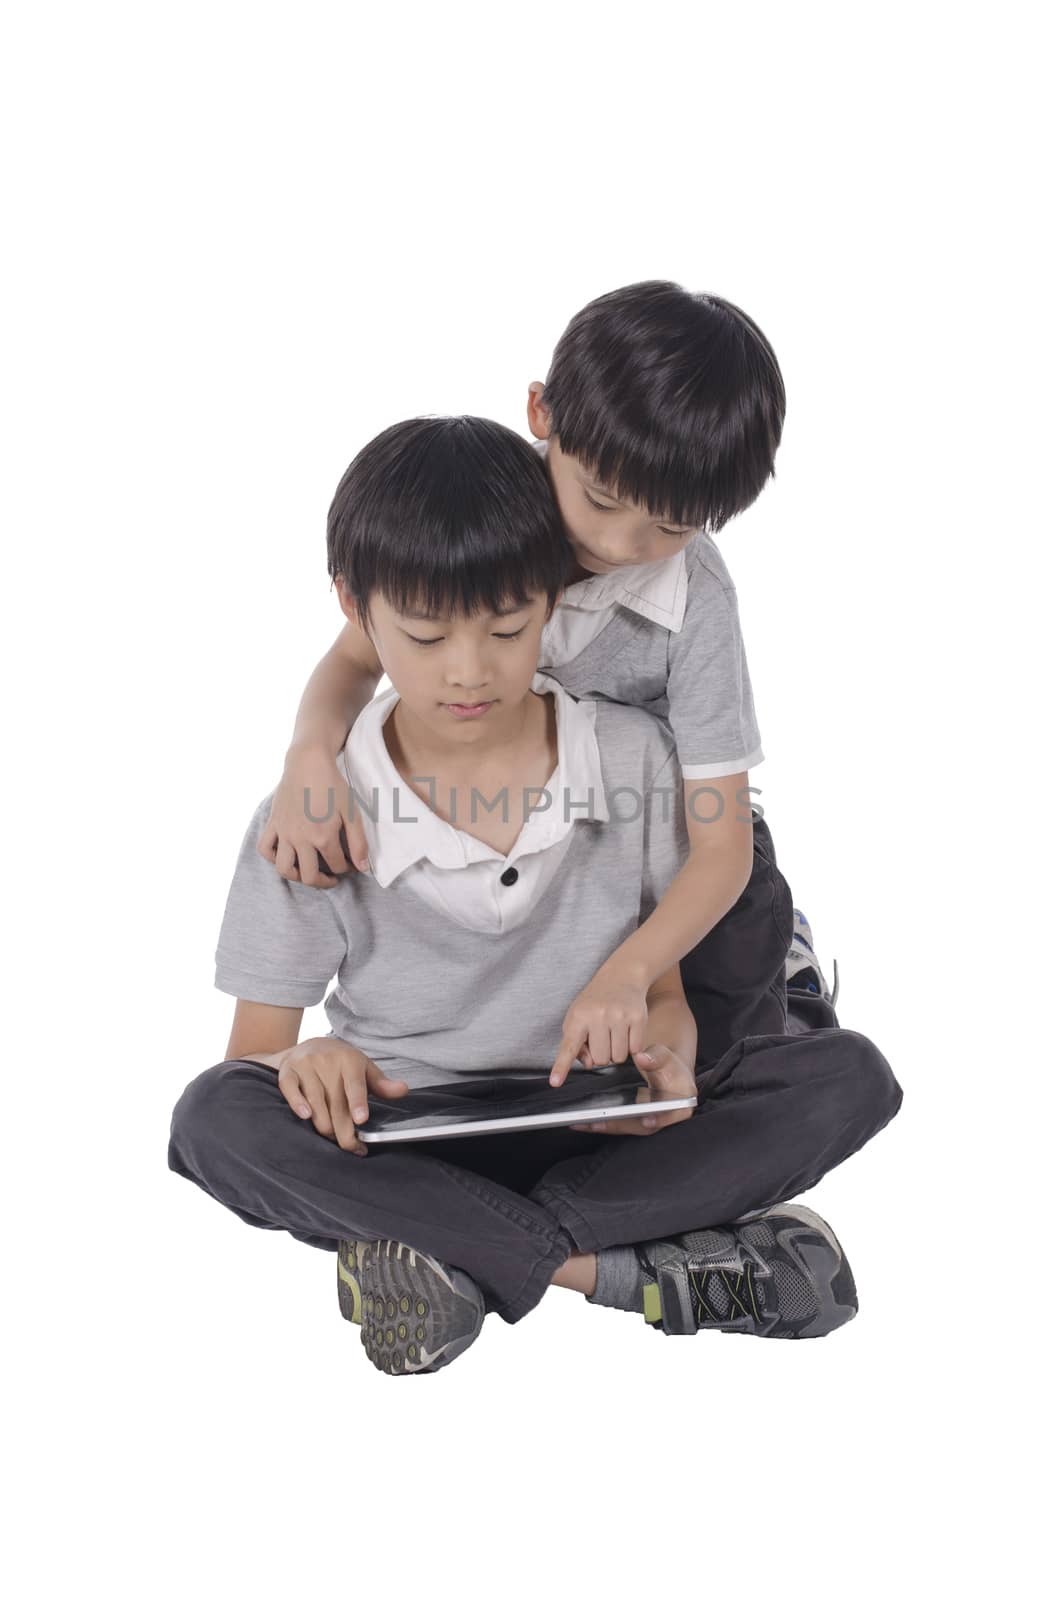 Children using laptop by FrankyLiu